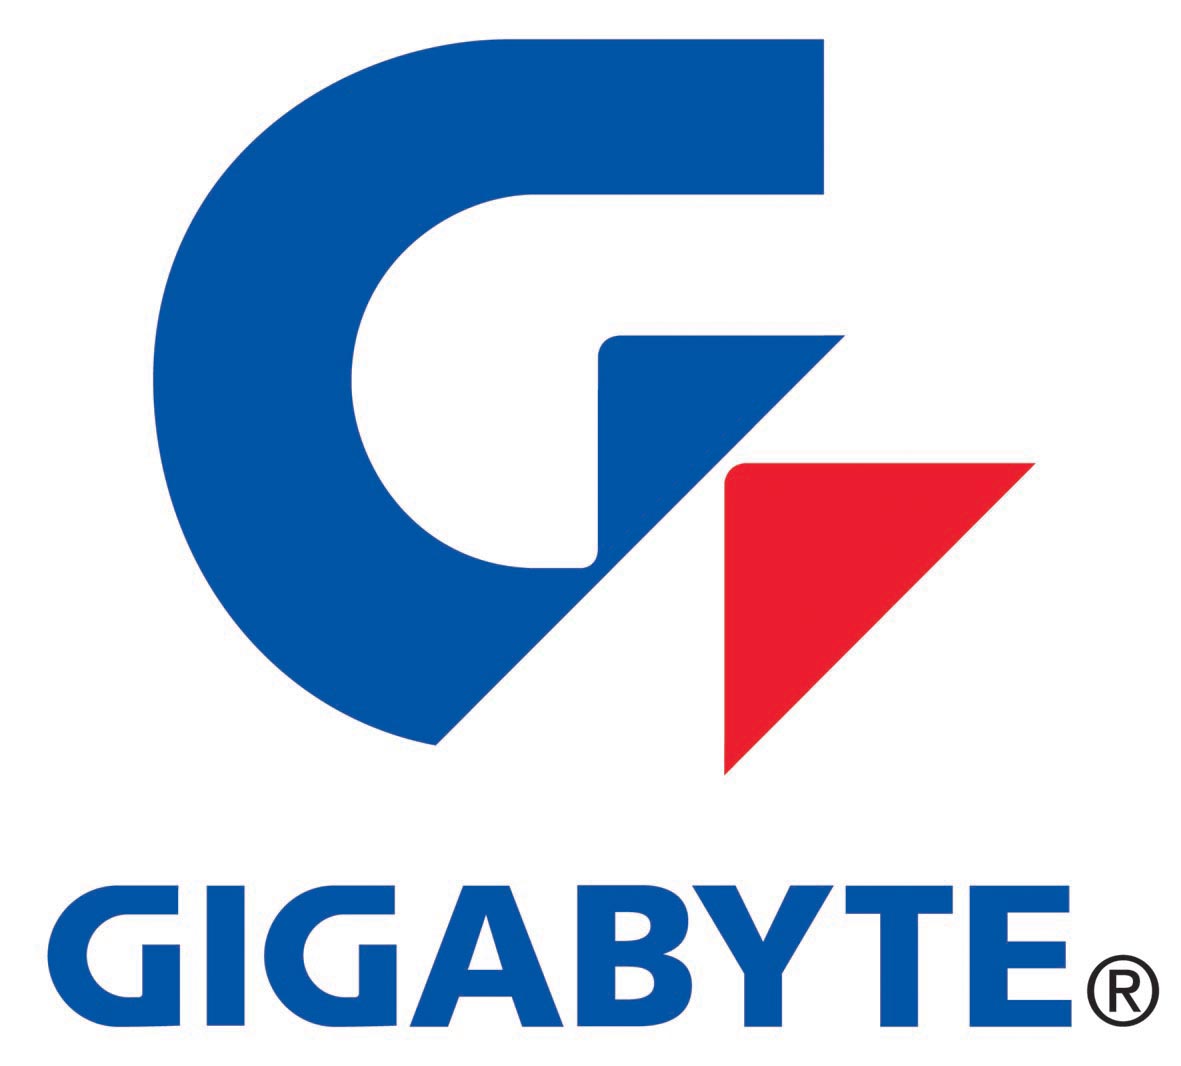 GIGABYTE 3 godine garancije za matične ploče i grafiče kartice